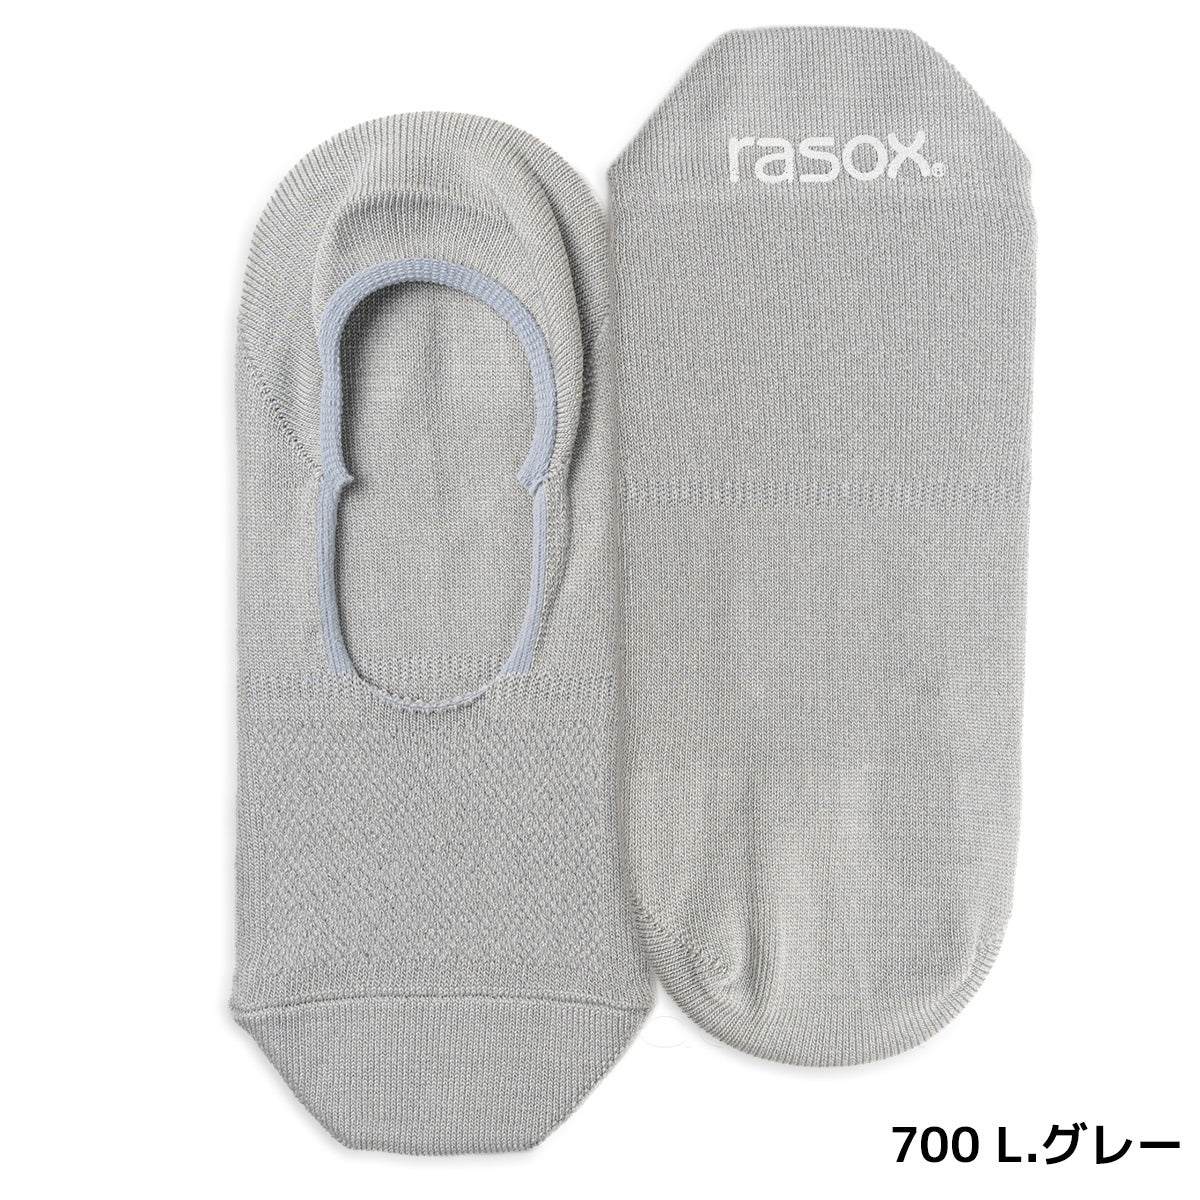 rasox ラソックス カバーソックス 靴下 ファインクールカバー